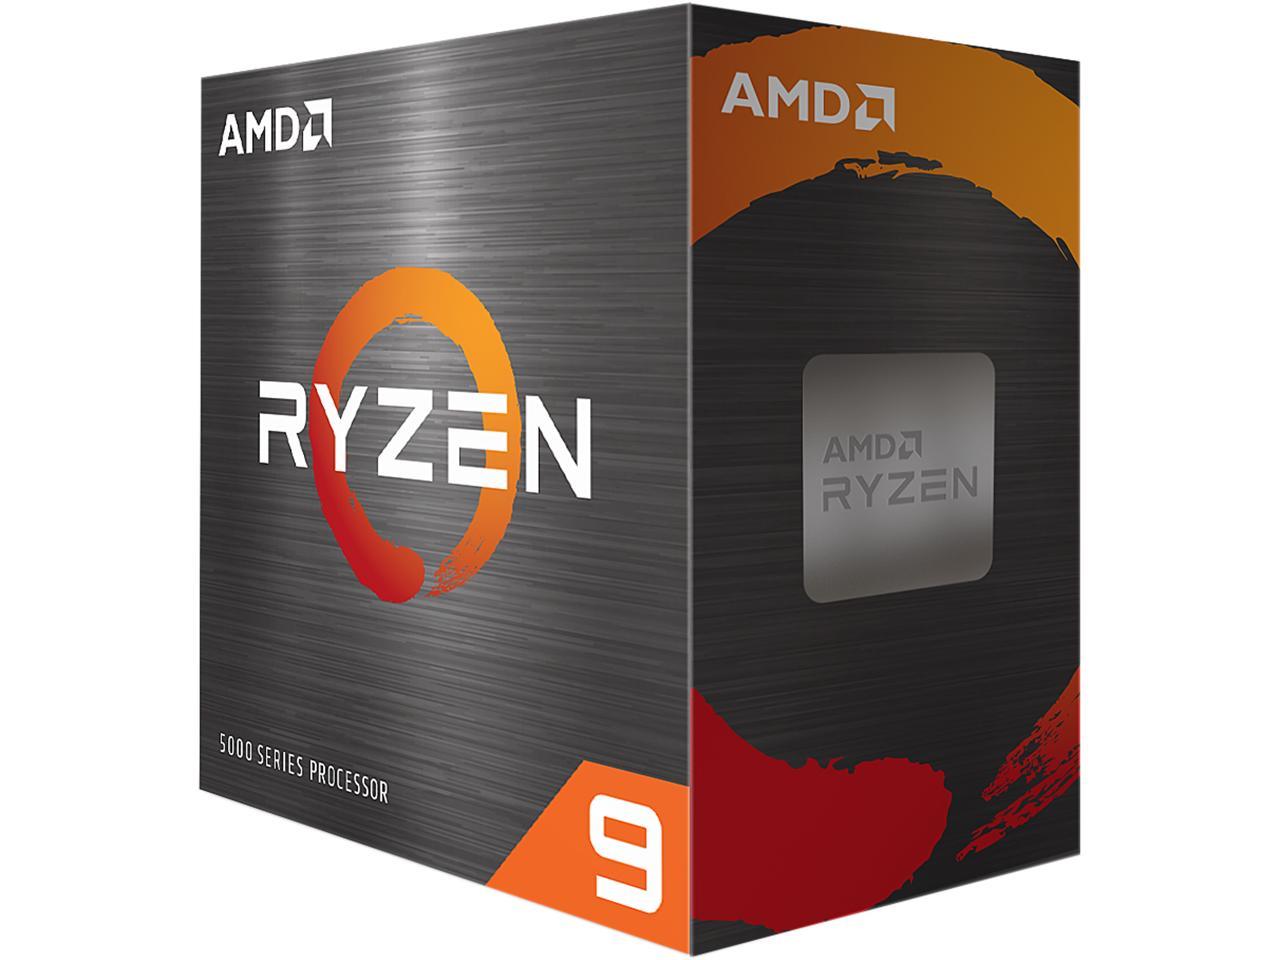 AMD Ryzen 9 5950X Desktop Processor $390